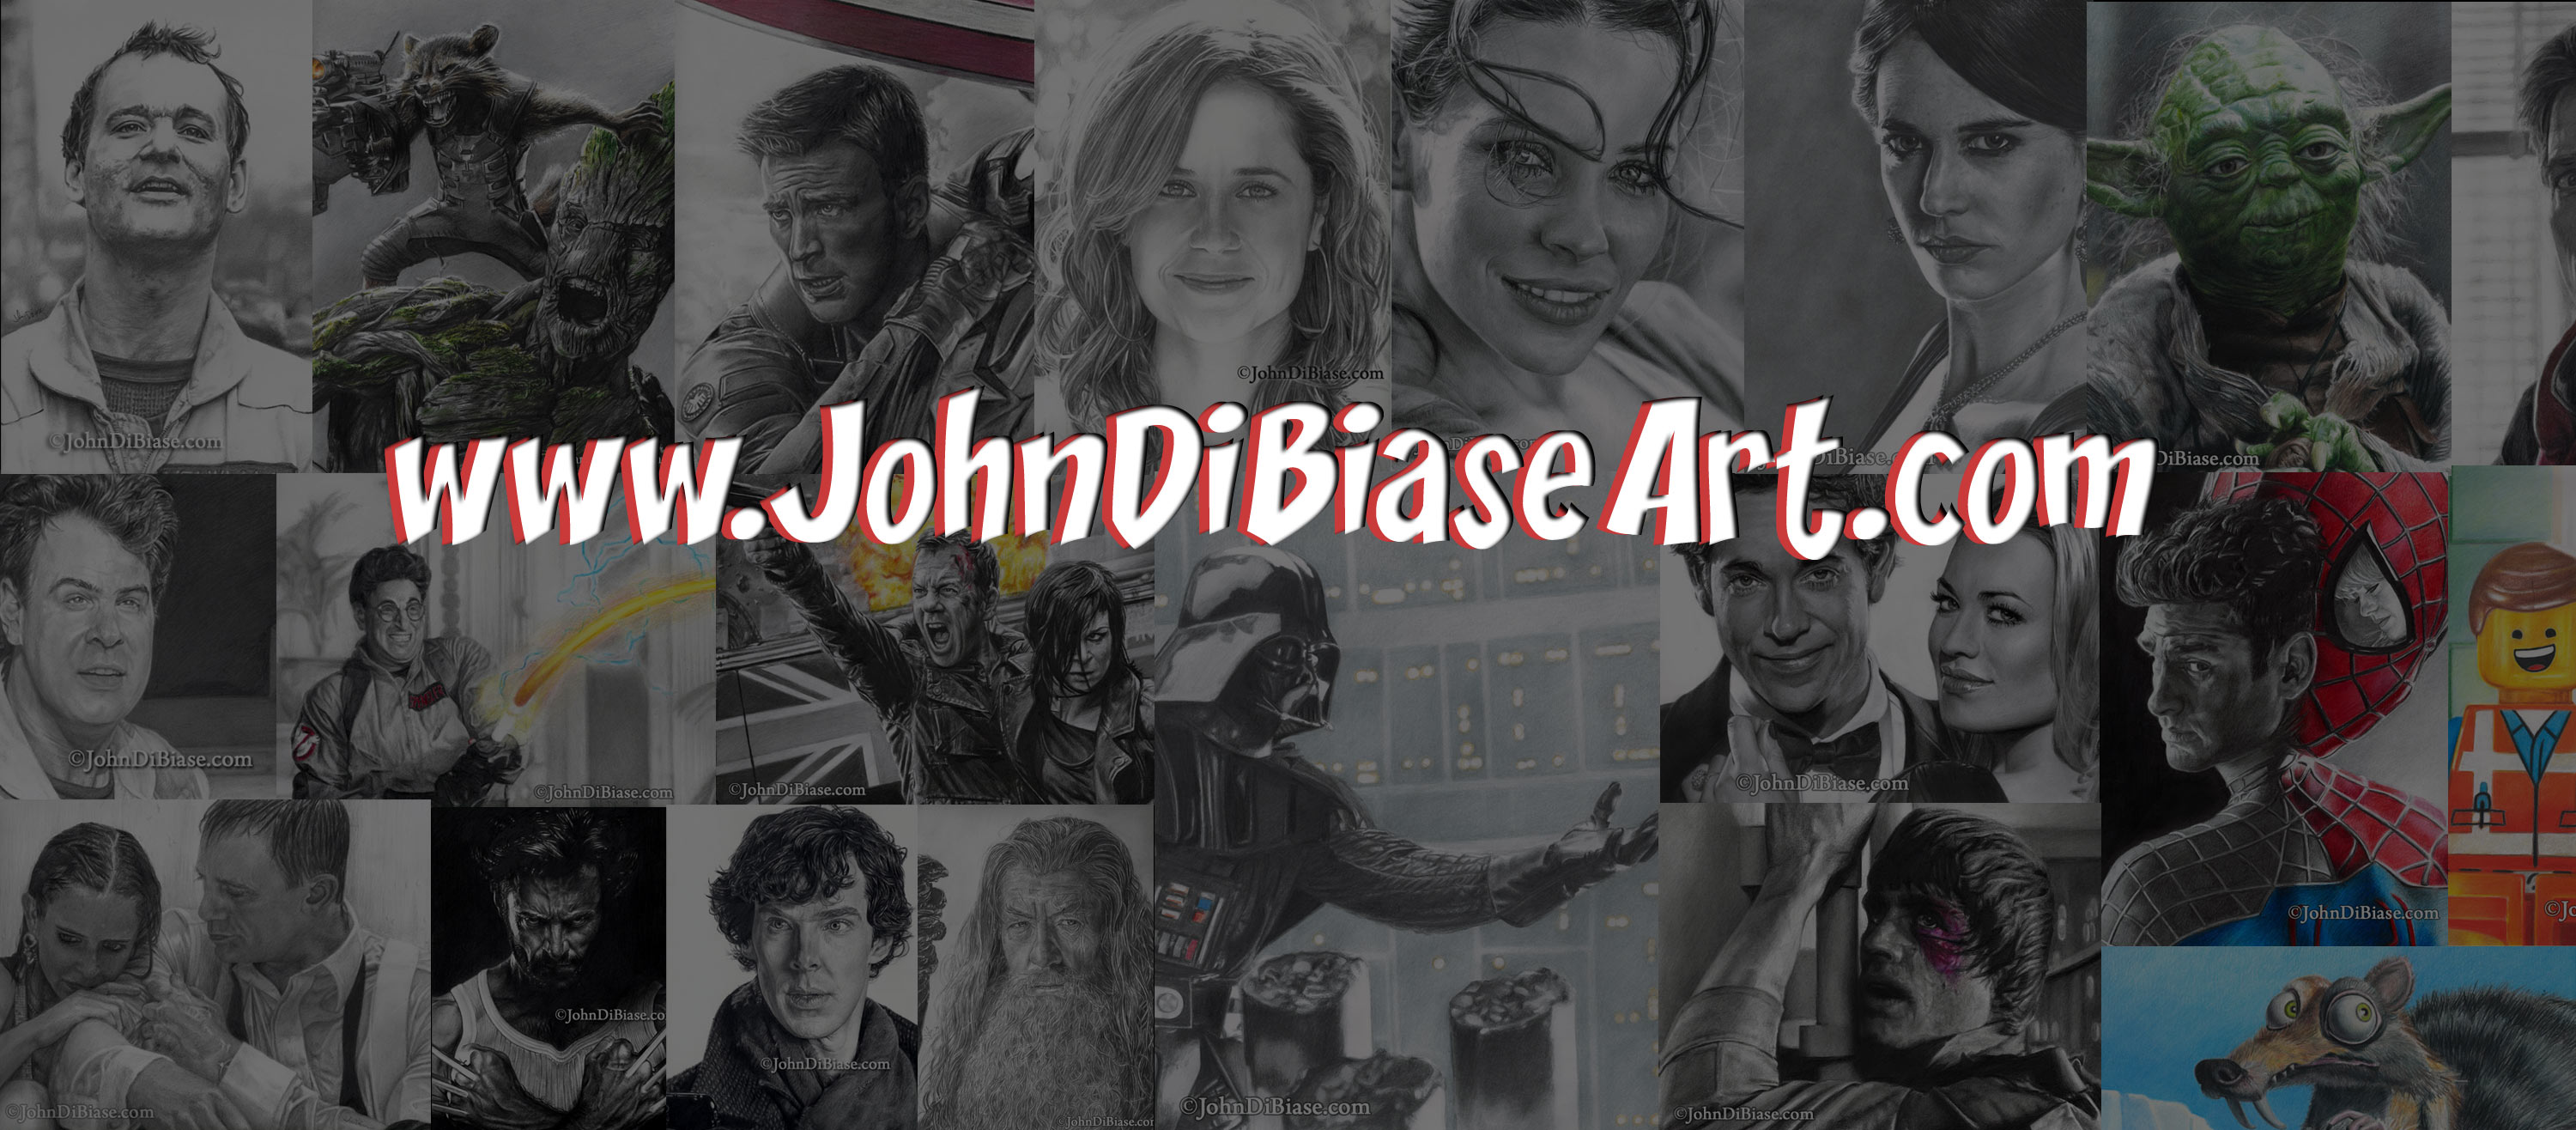 John DiBiase Art Collection